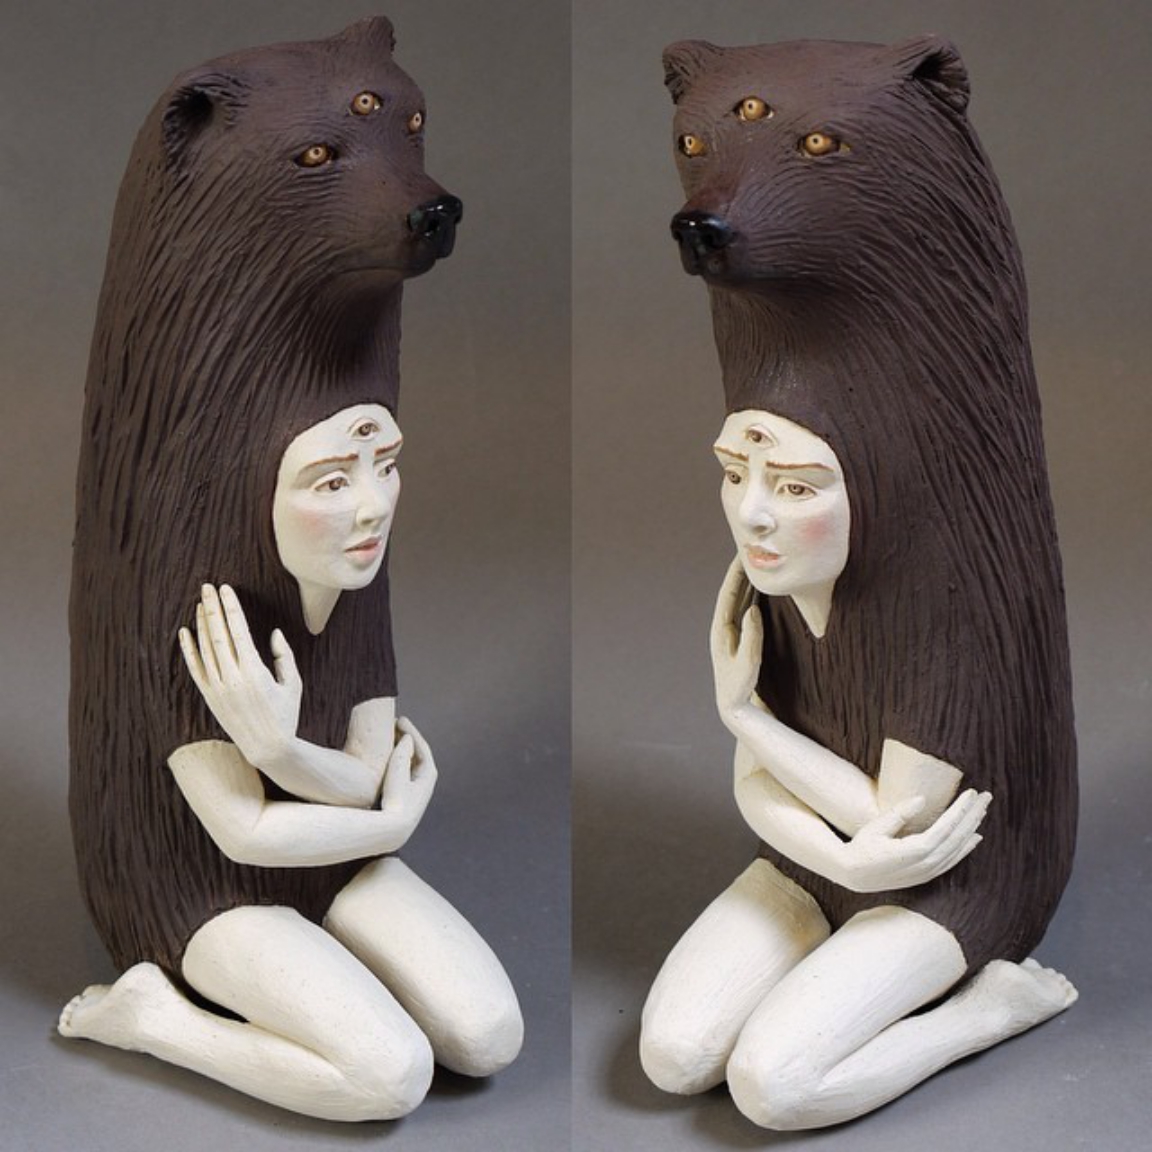 Crystal Morey's Striking Ceramic Sculptures Of Human Animal Hybrids (7)